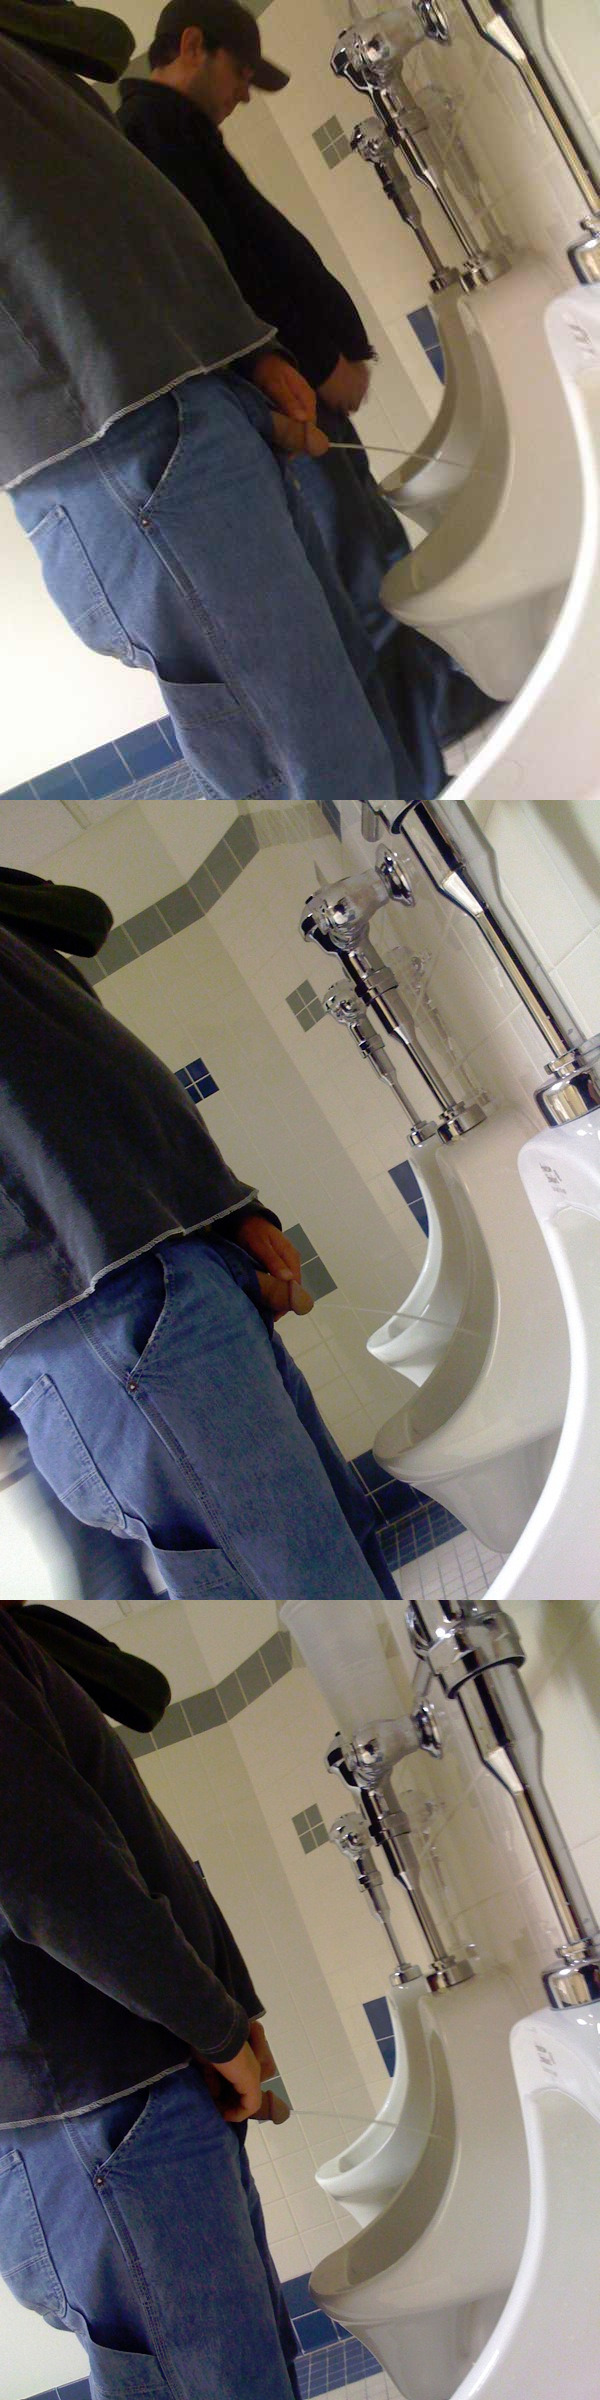 two men caught peeing urinals